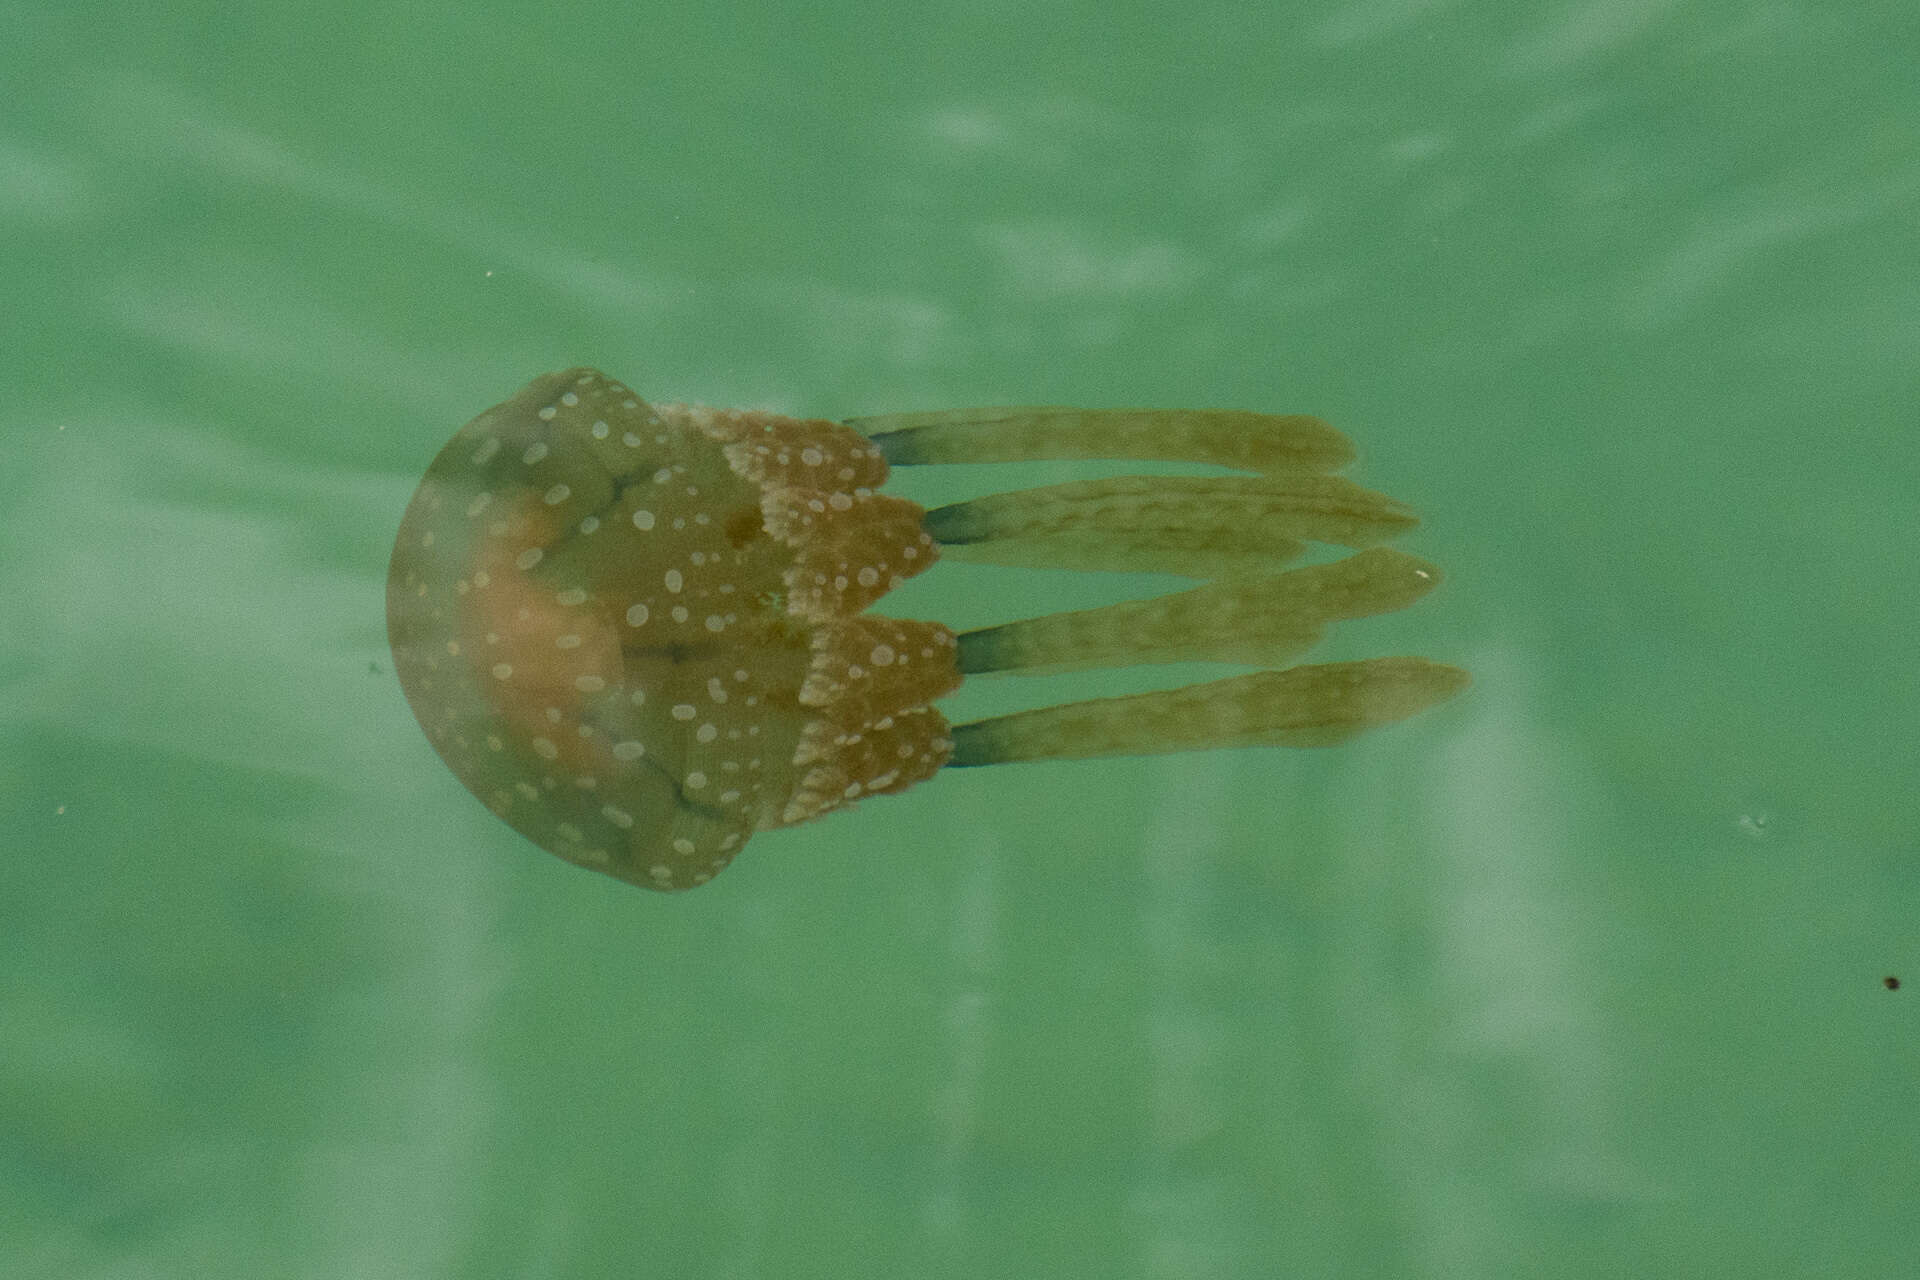 Image of jellyfish